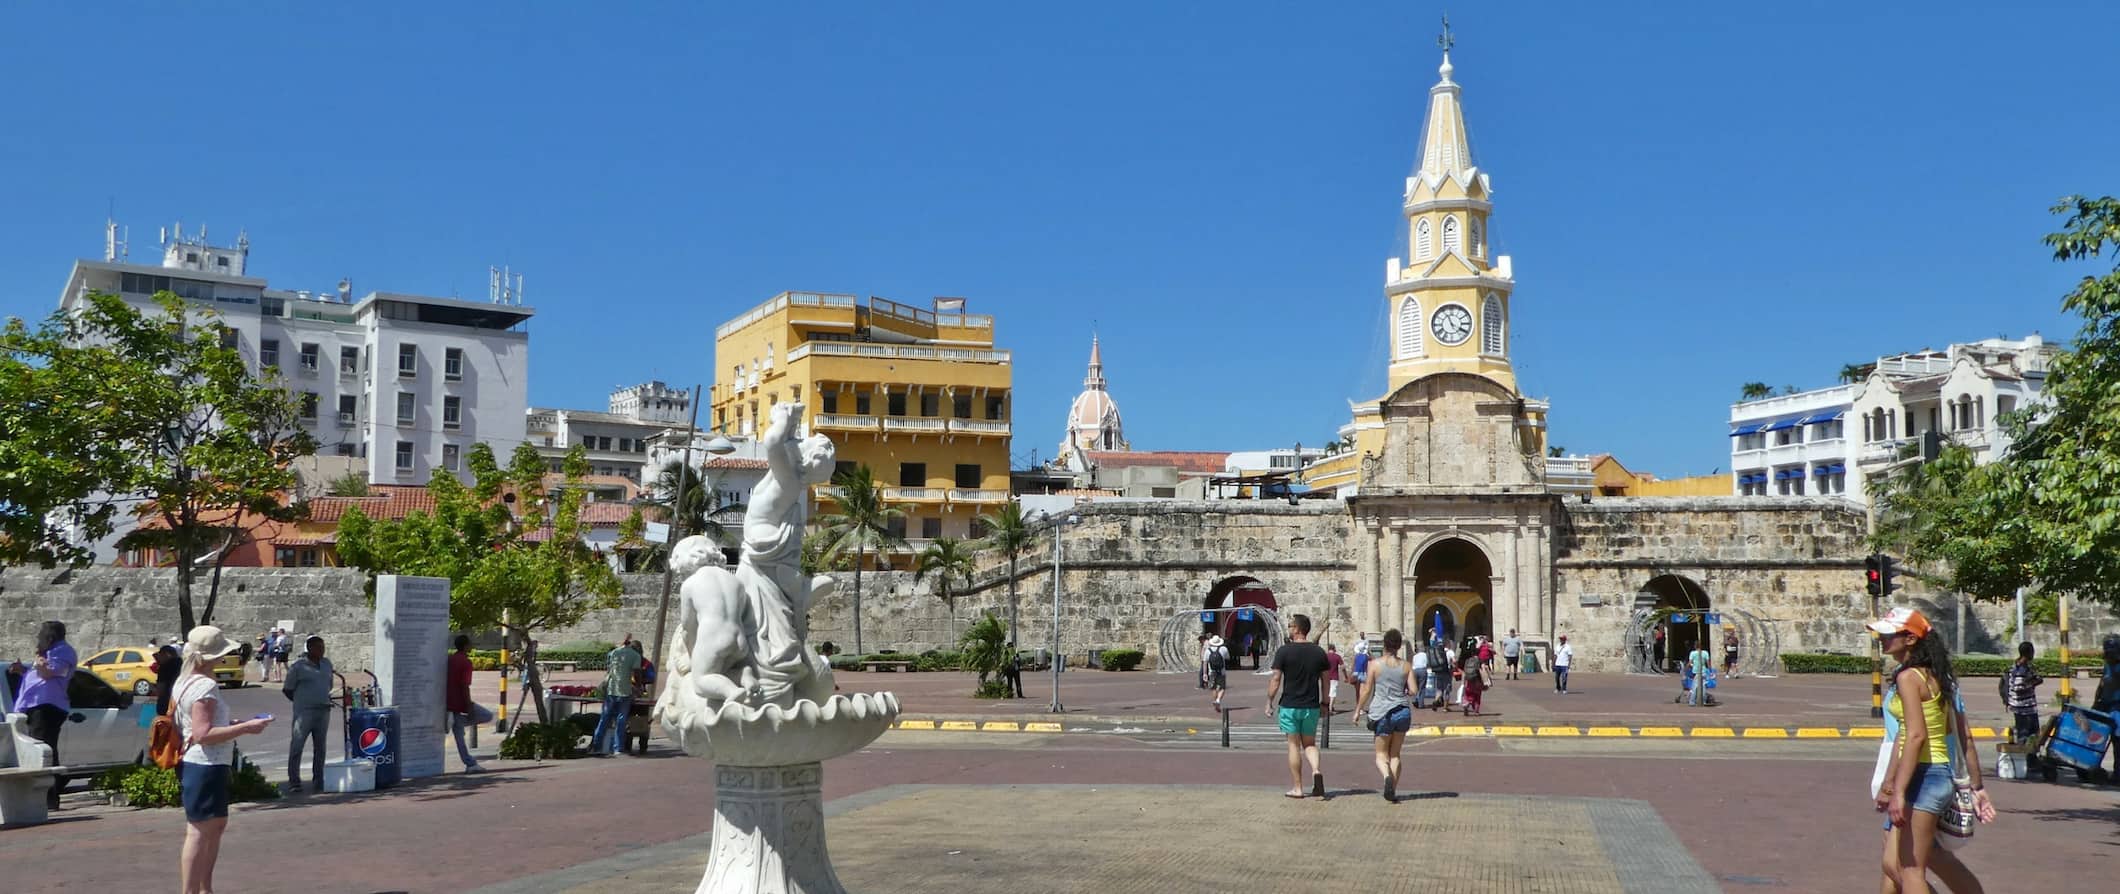 CartagenaHeader